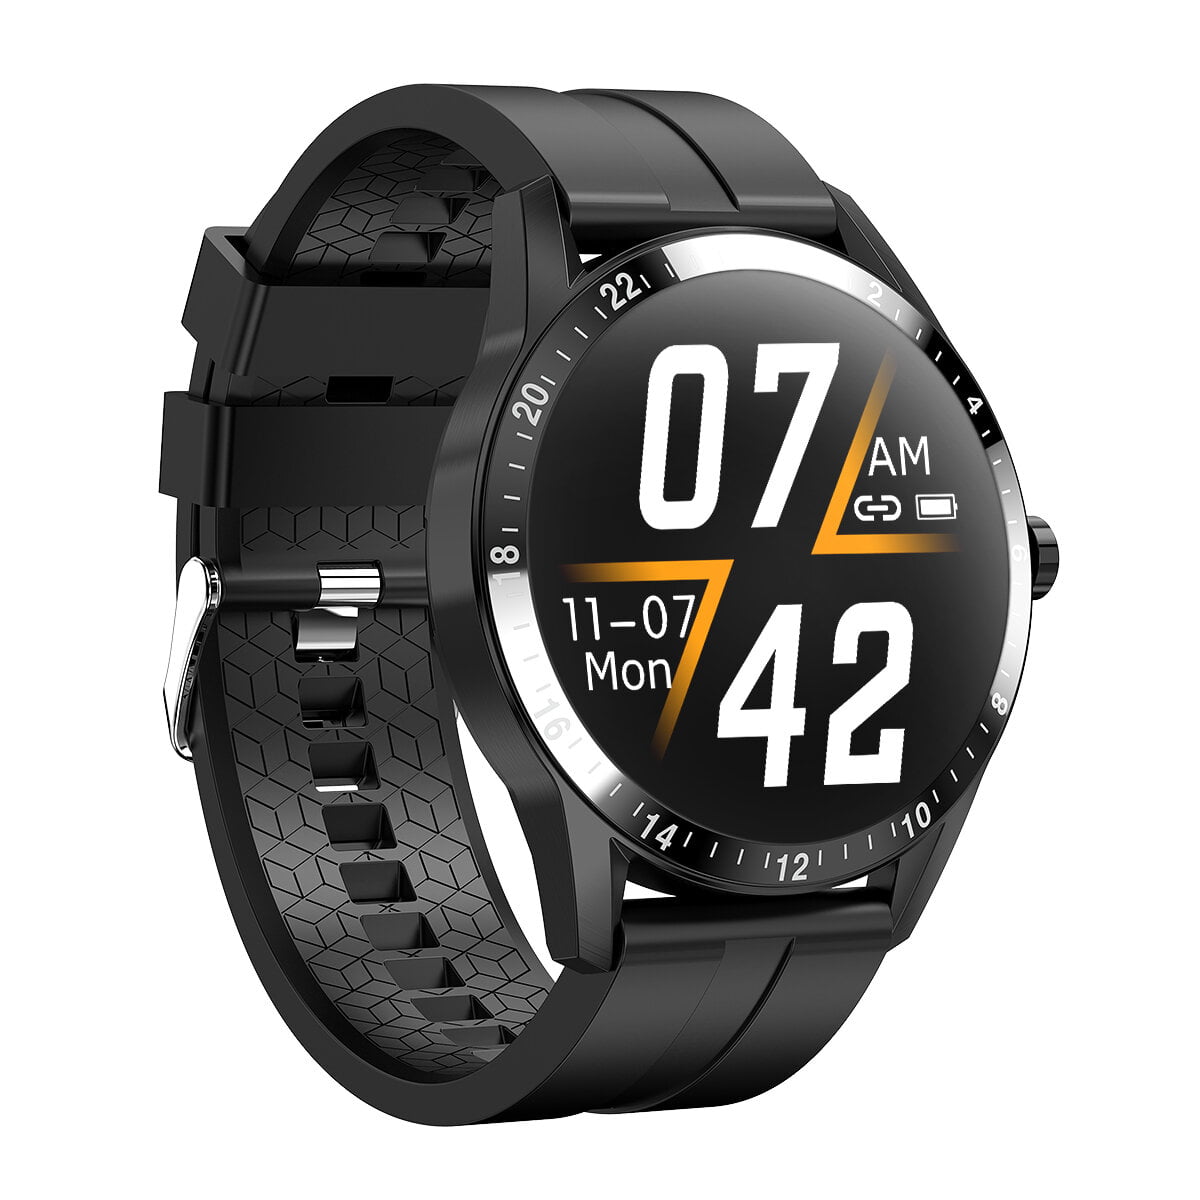 Bakeey smartwatch G20 Smart Watch heart rate blood pressure monitor ip67 smart watch wholesale (7)